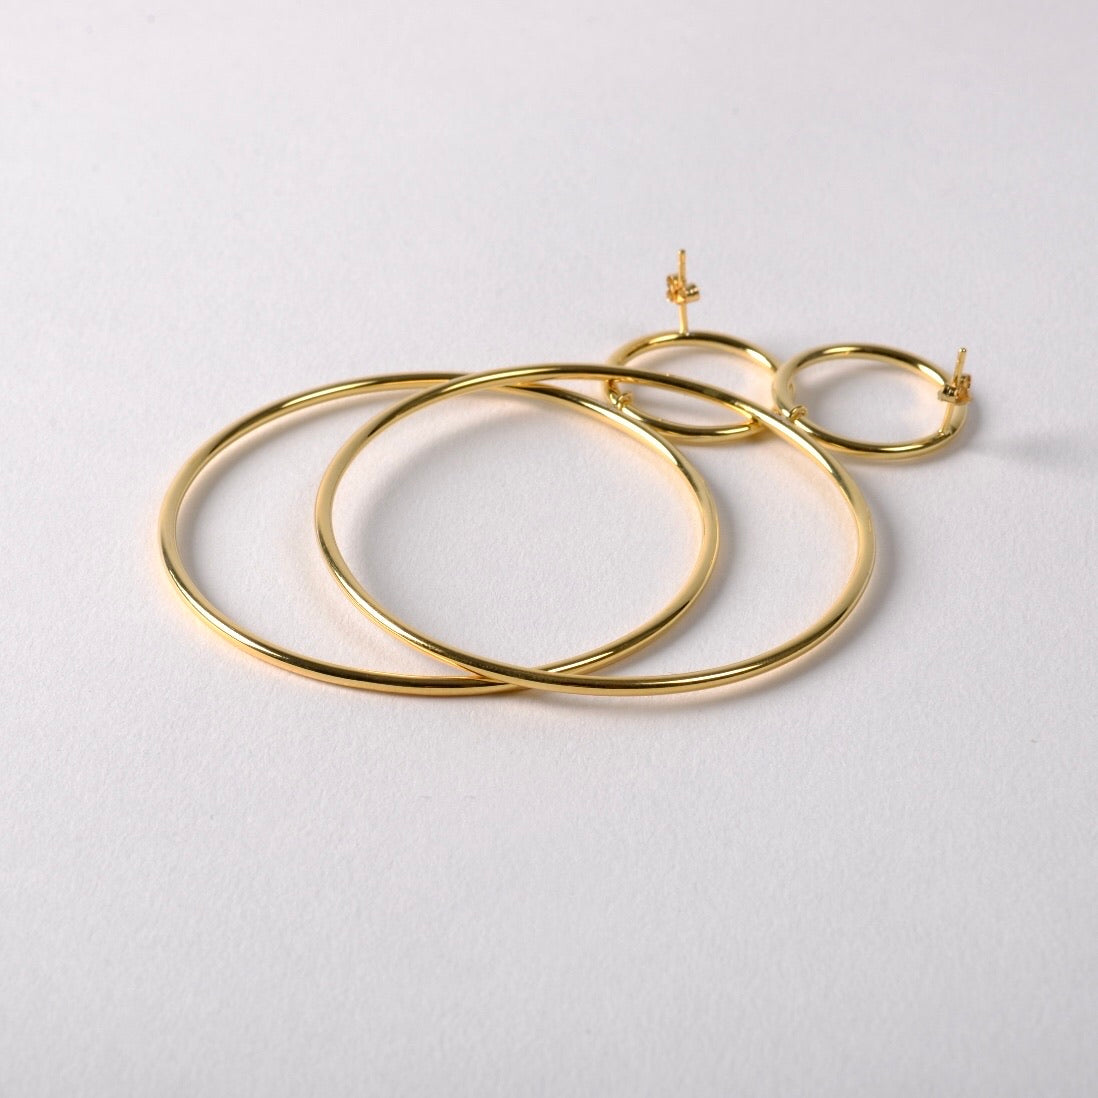 Double Hoop Earrings, 14ct Gold Plate